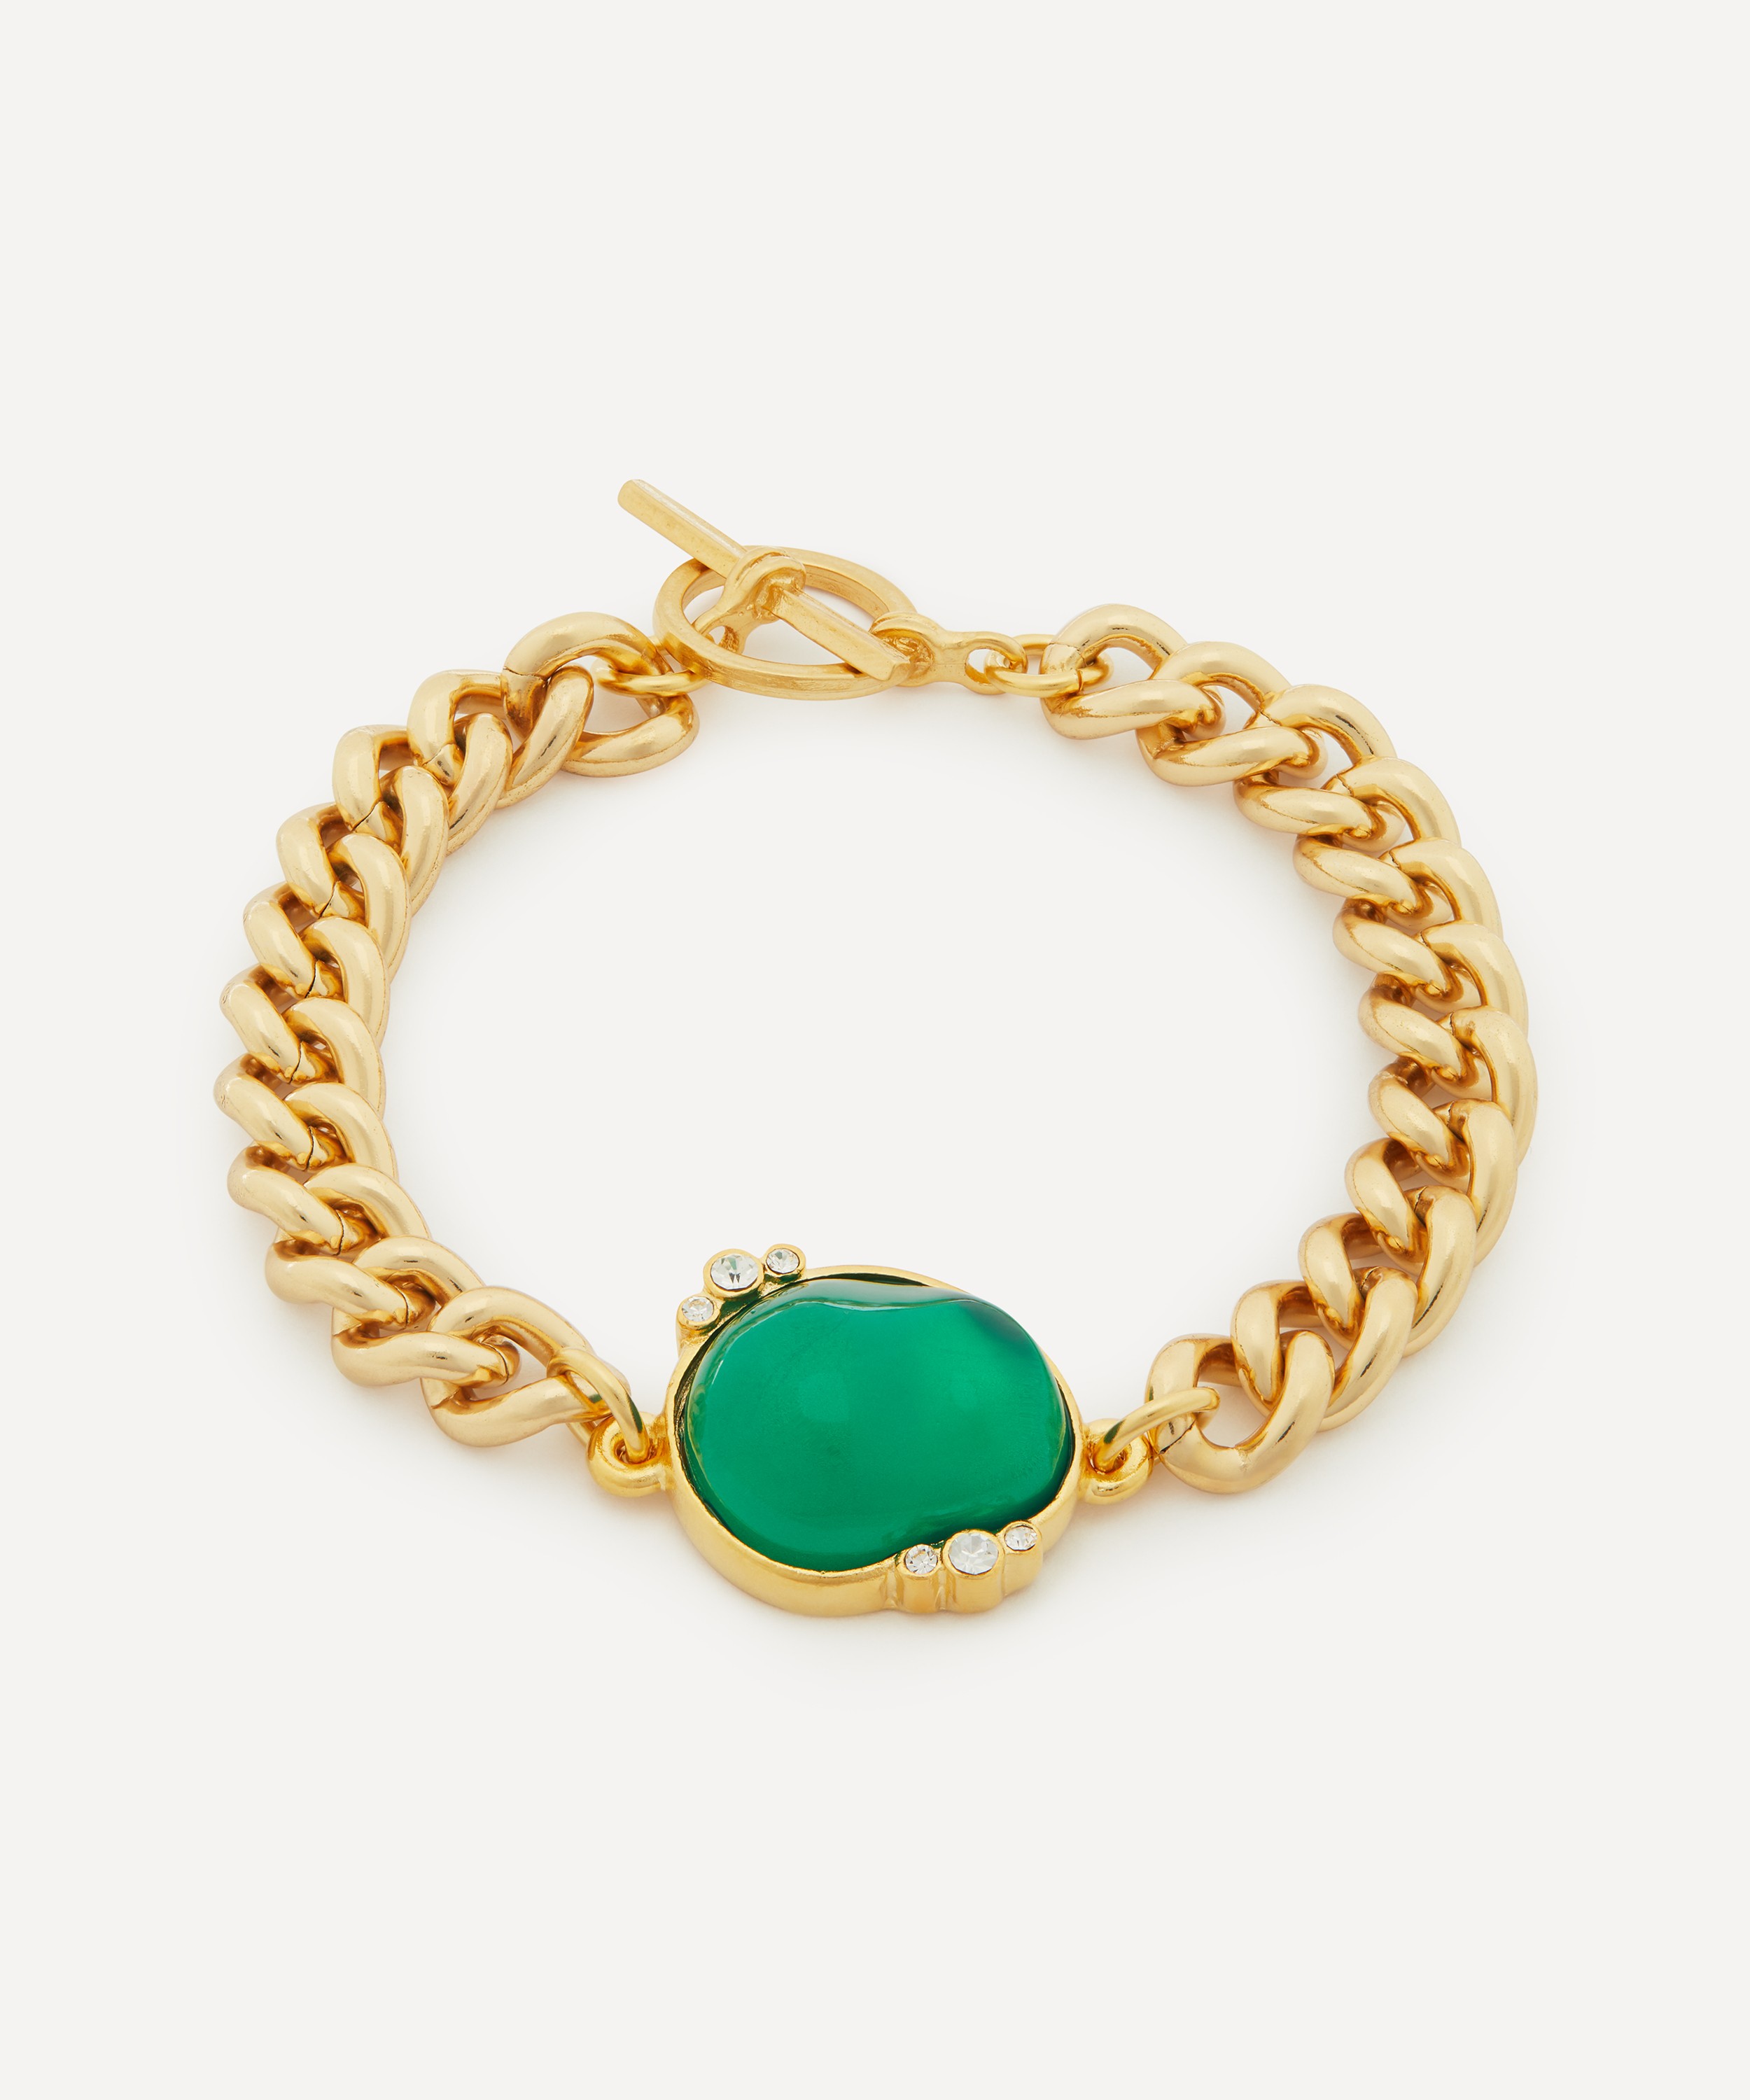 Paradise Chain Bracelet - Luxury New This Season - Accessories